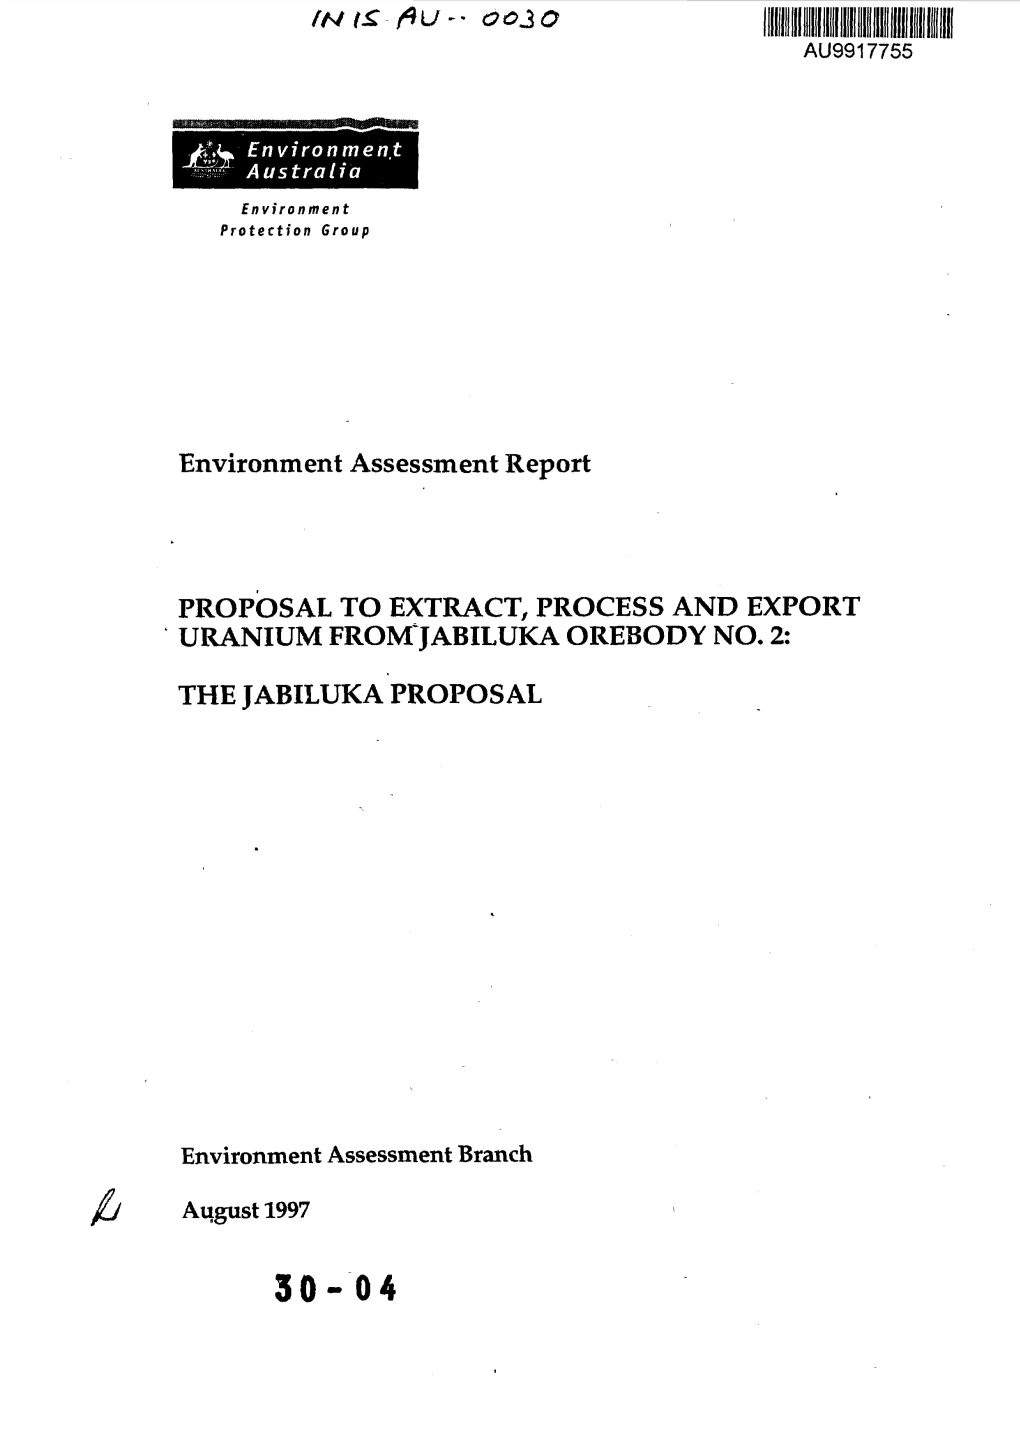 Proposal to Extract, Process and Export Uranium from Jabiluka Orebody No